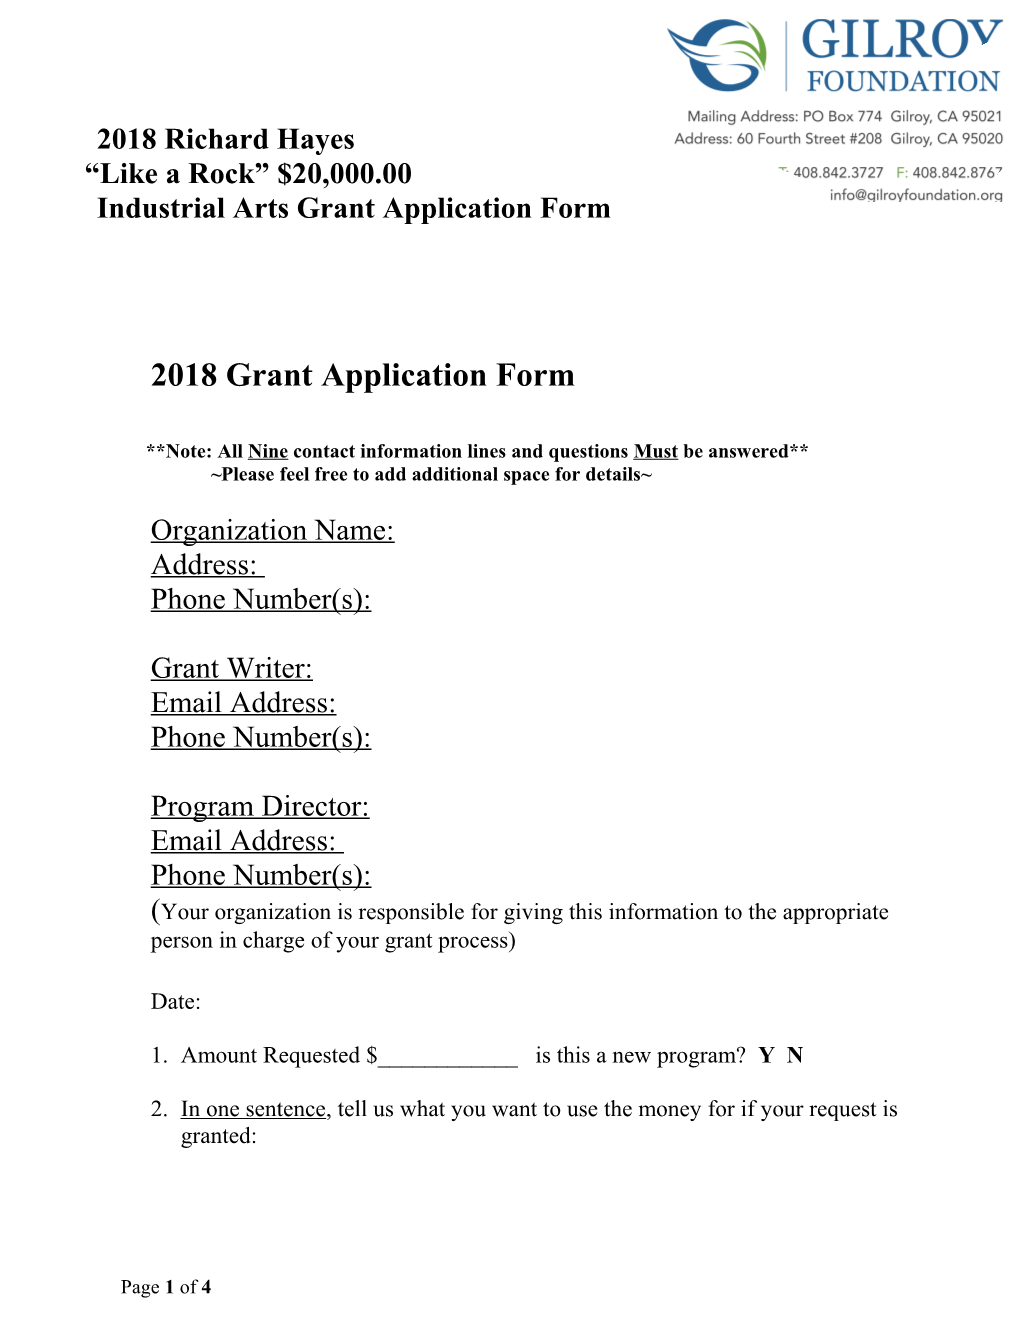 Industrial Arts Grant Application Form